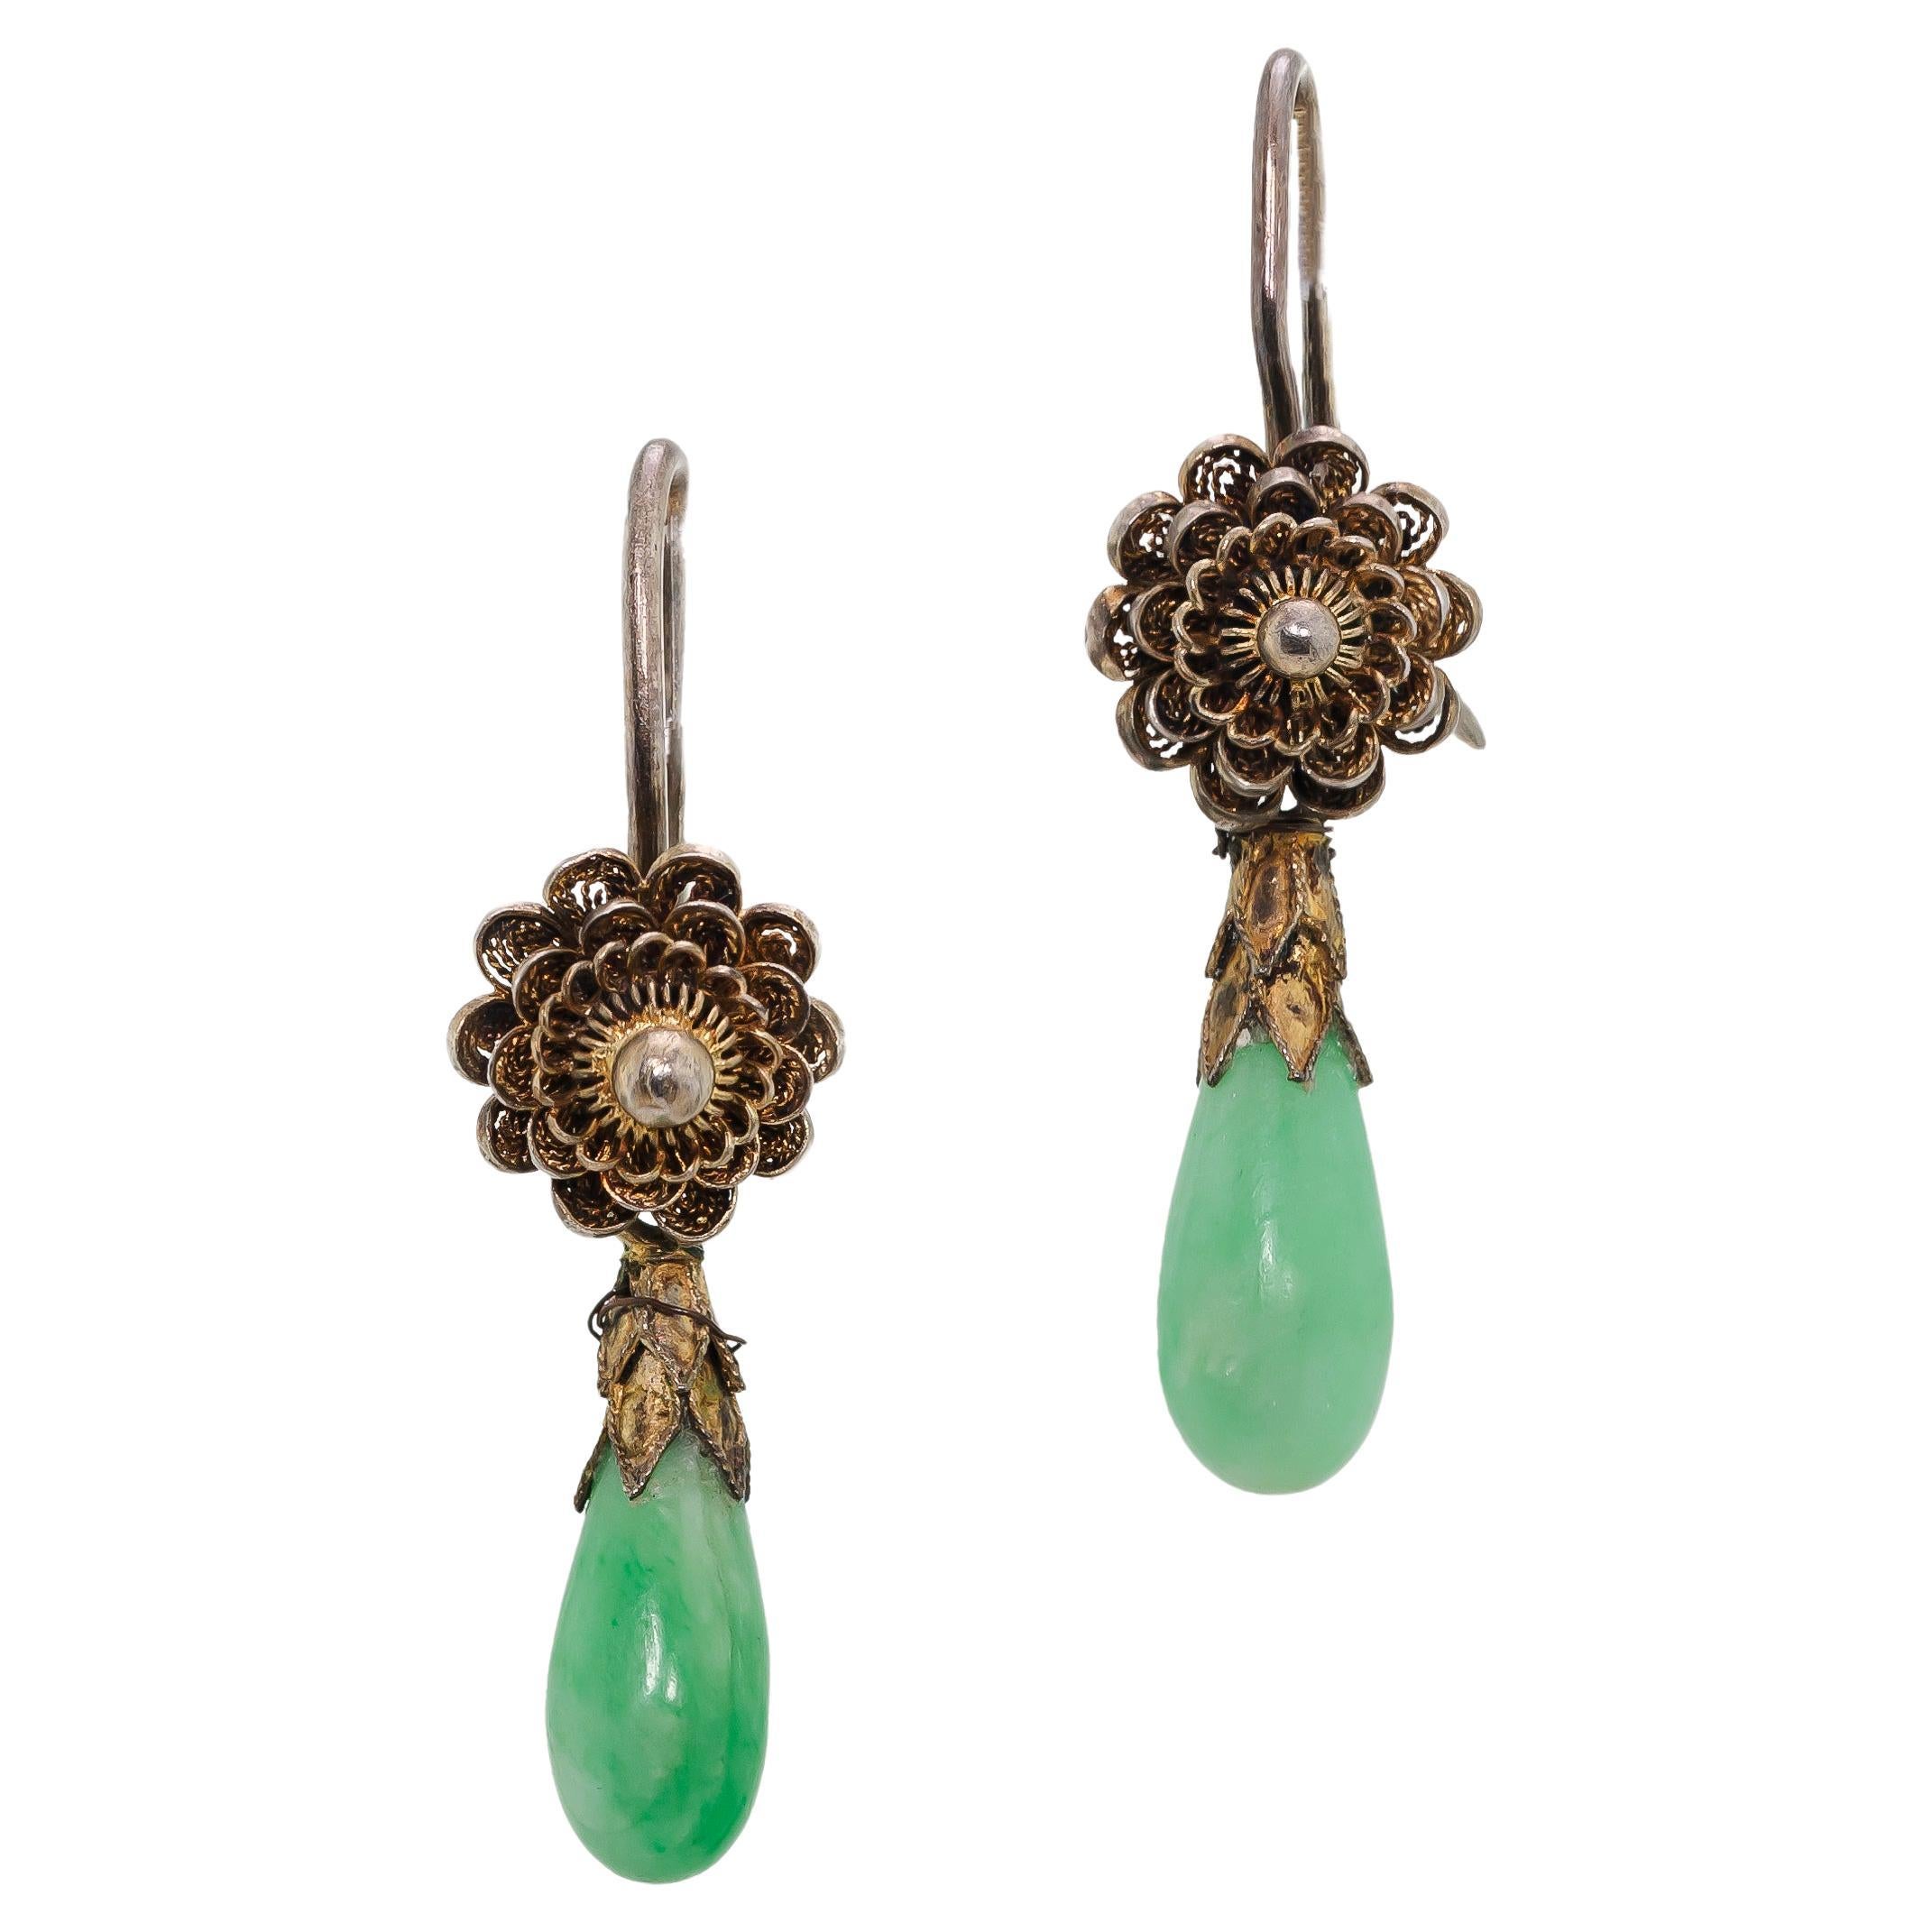 Lovely Vintage Jade and Silver Gilt Earrings